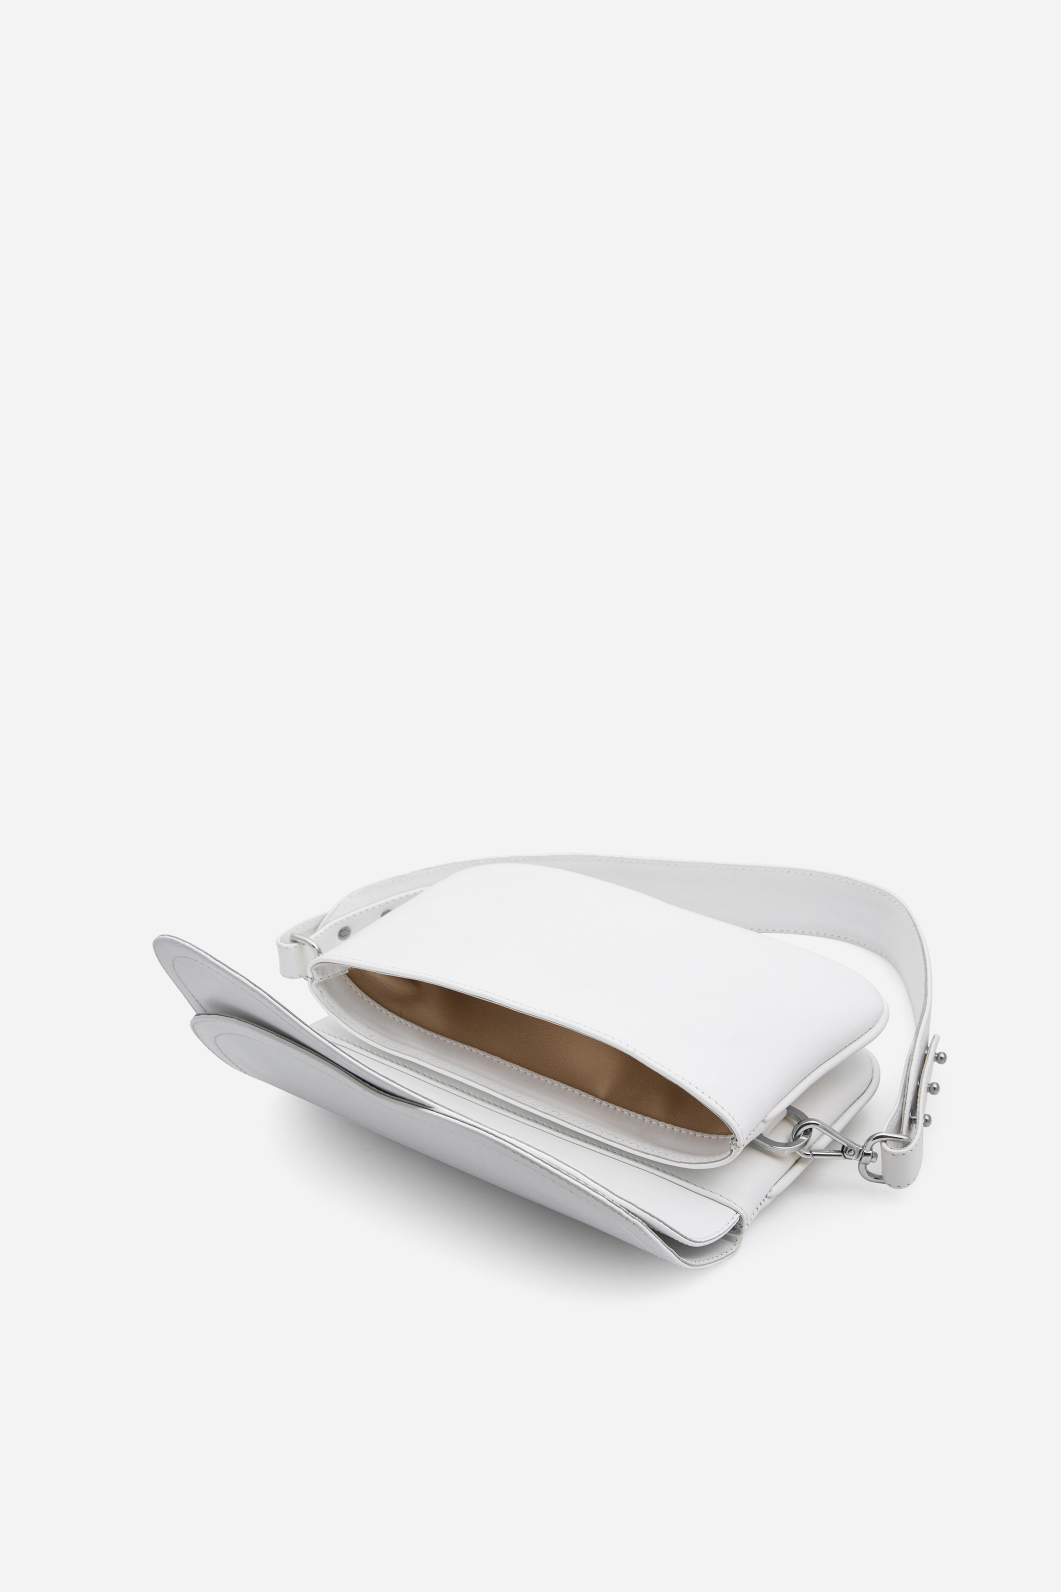 Saddle bag 2
white leather crossbody /silver/